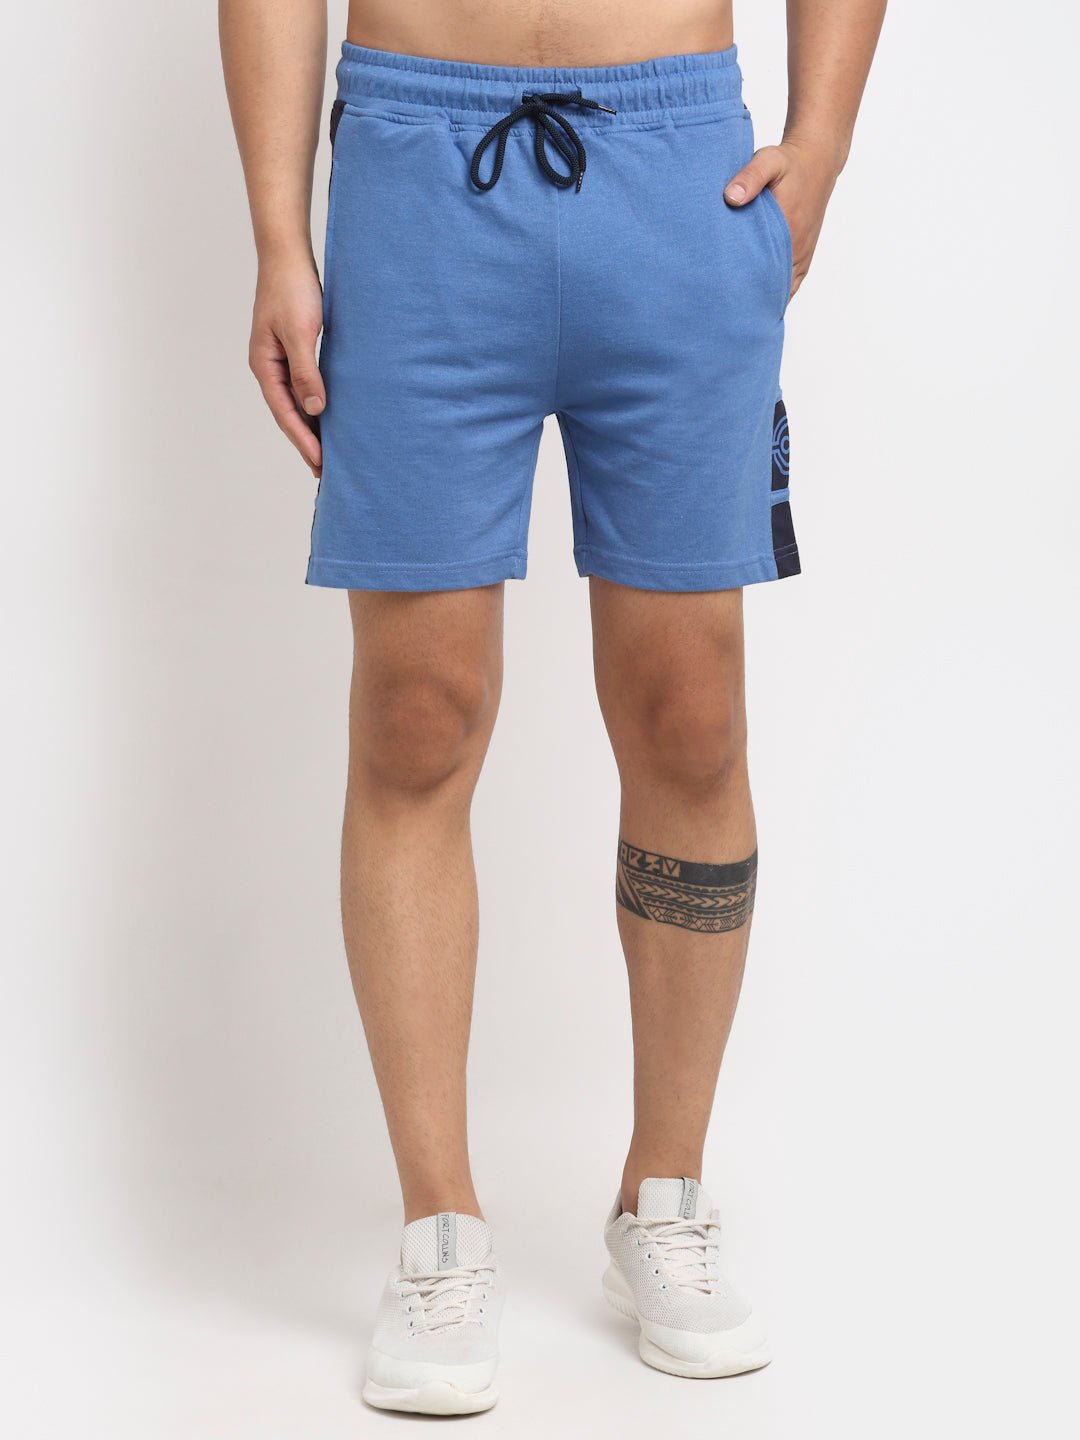 Blue Shorts - clubyork